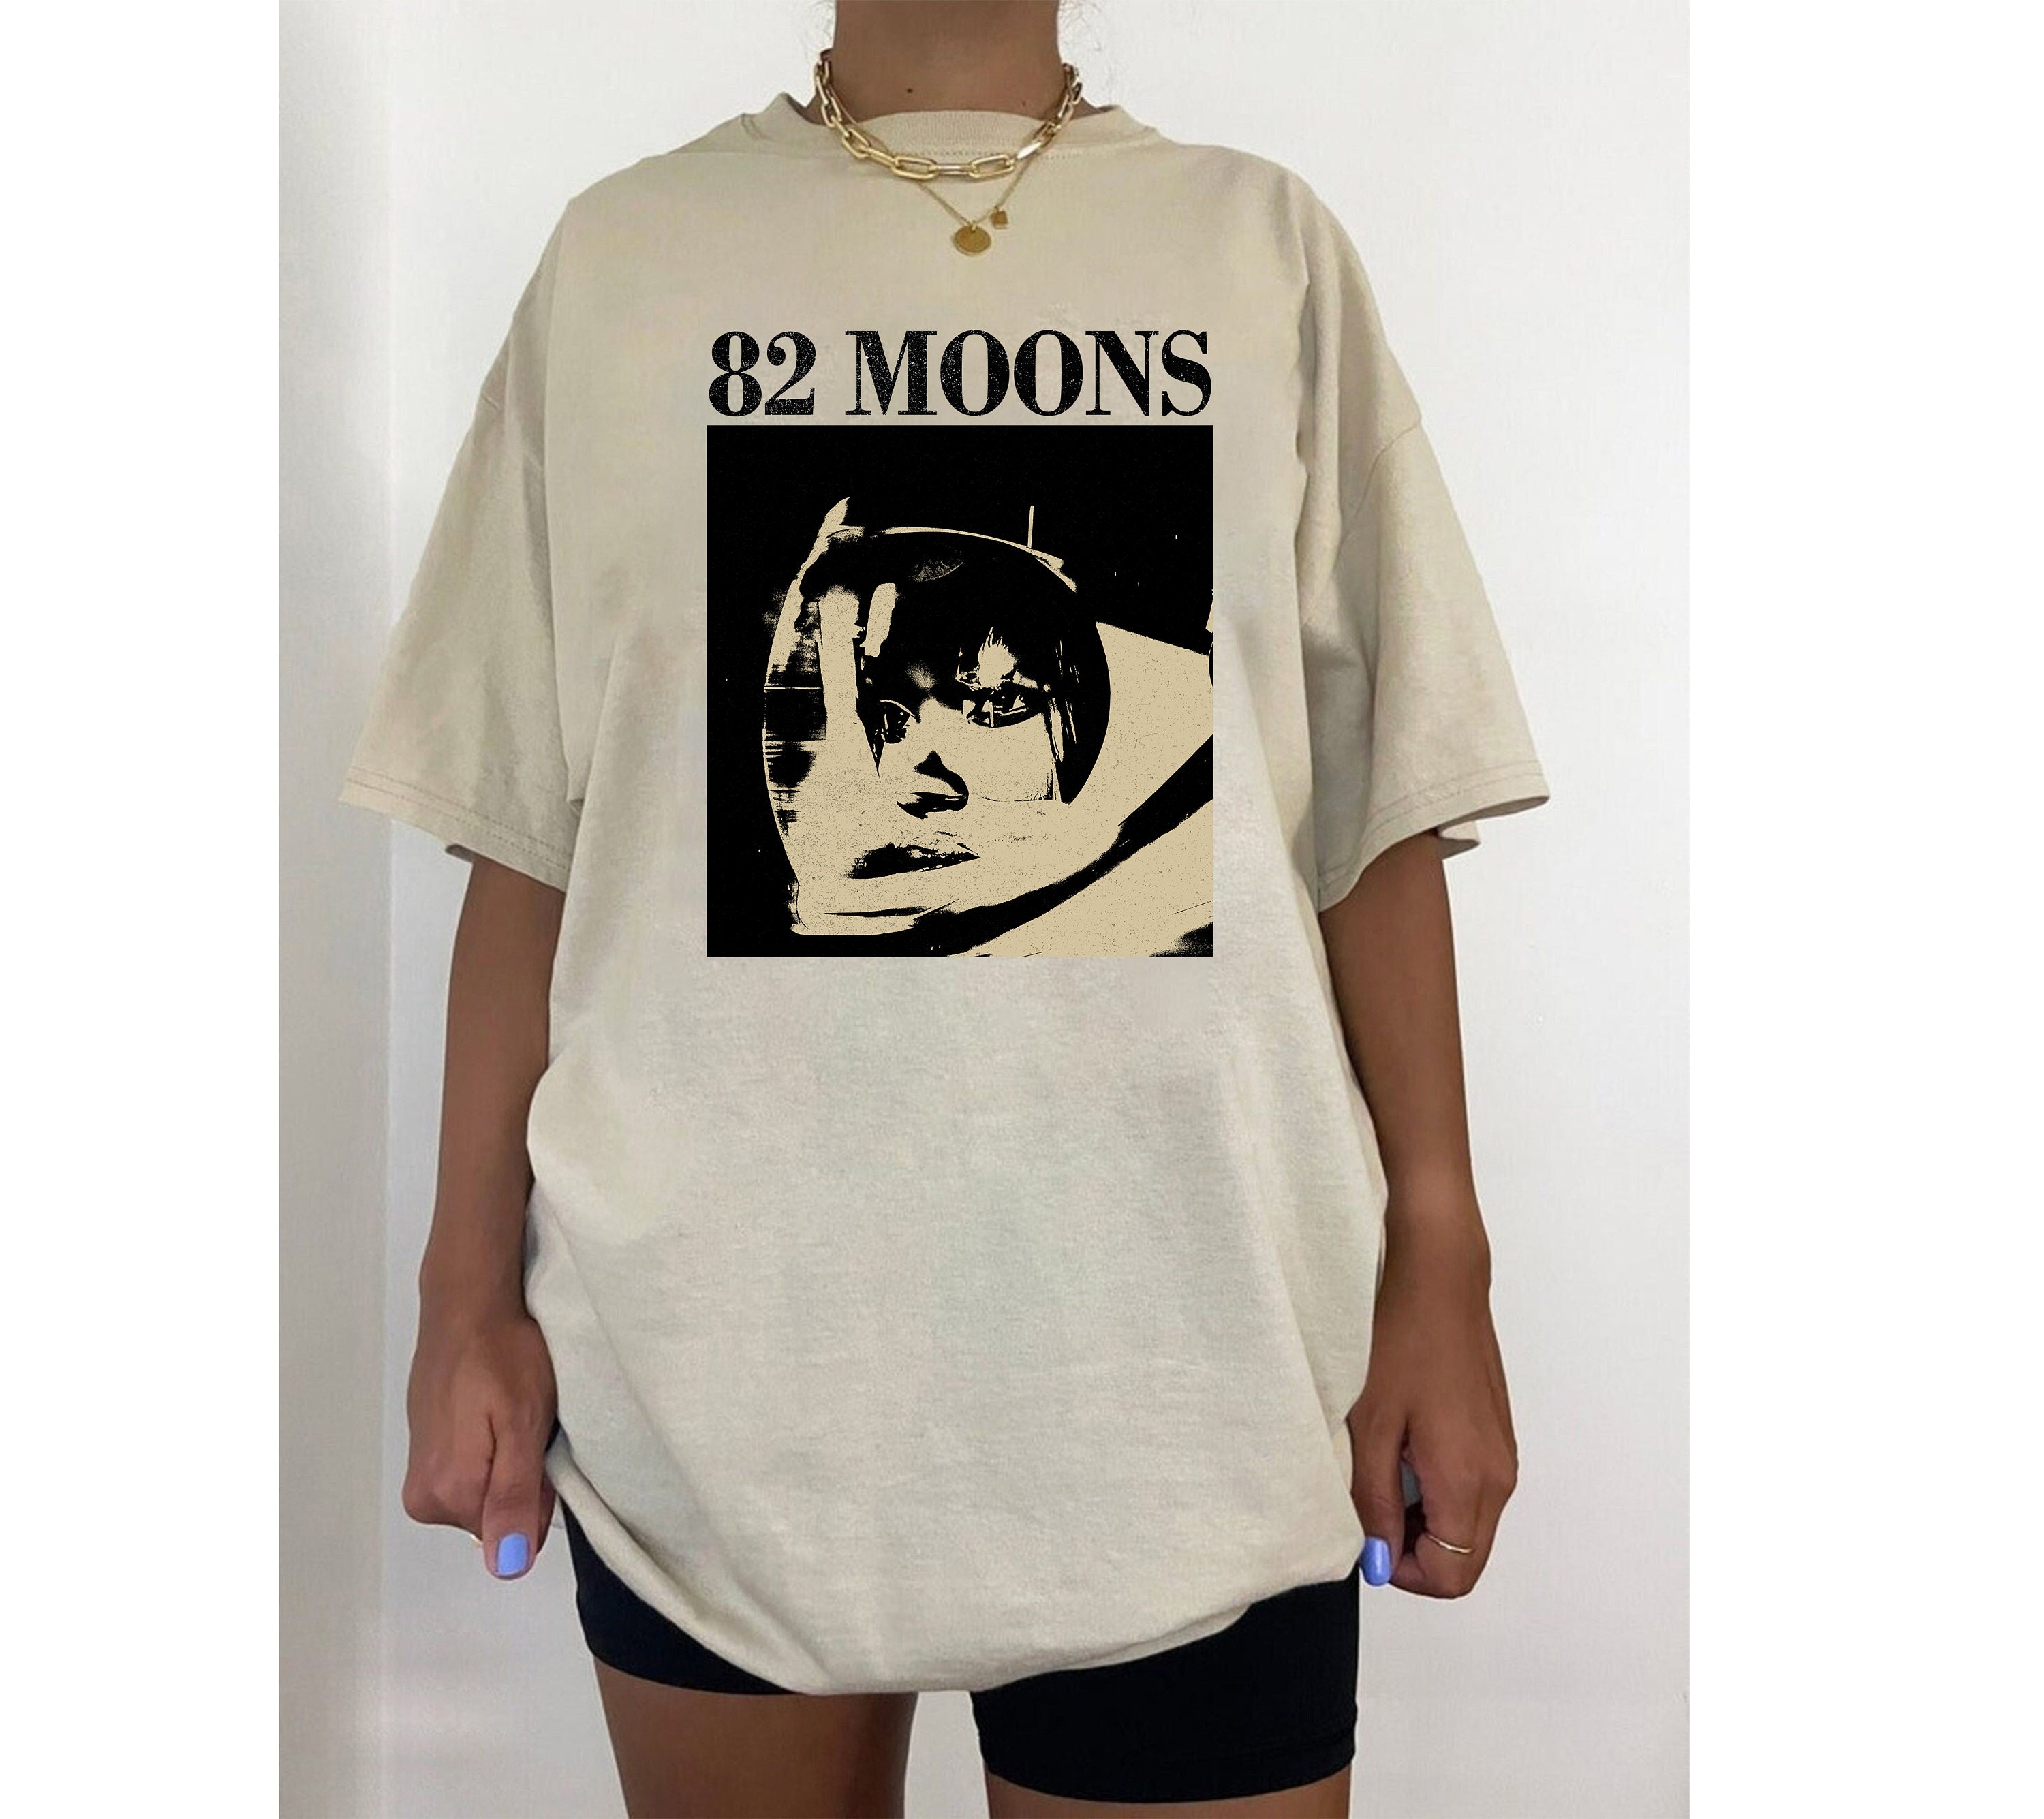 Miami Heat Vintage Abstract NBA T-Shirt - Moon Best Print